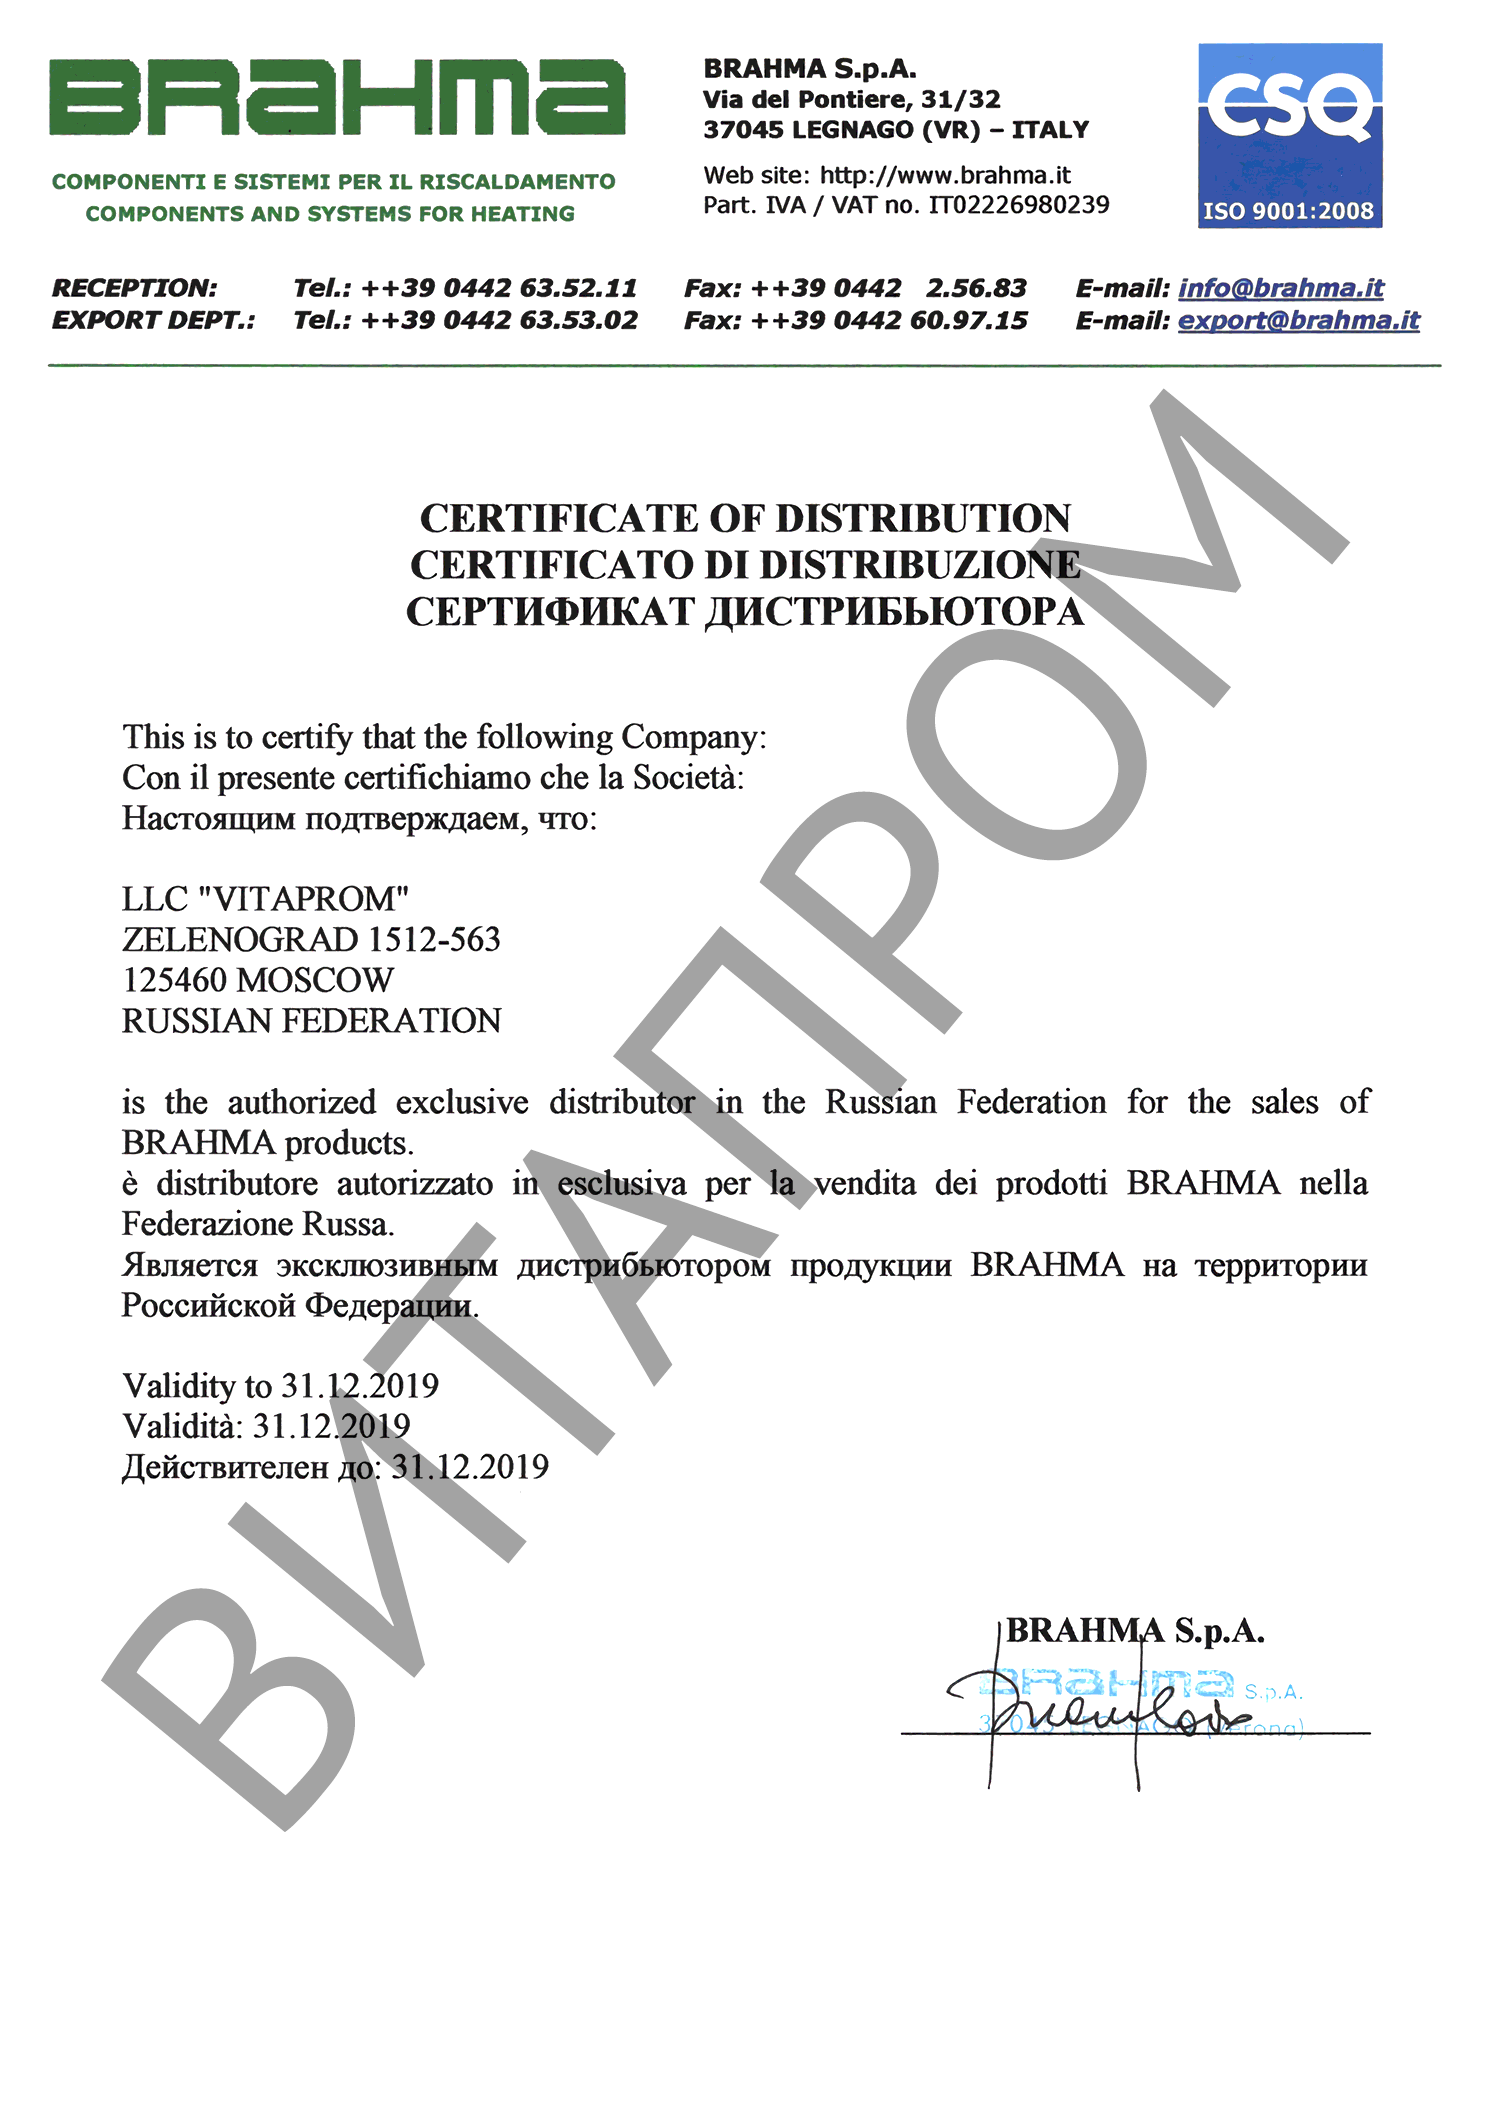 Сертификат дистрибьютора Brahma 2019 (rus - eng - it)